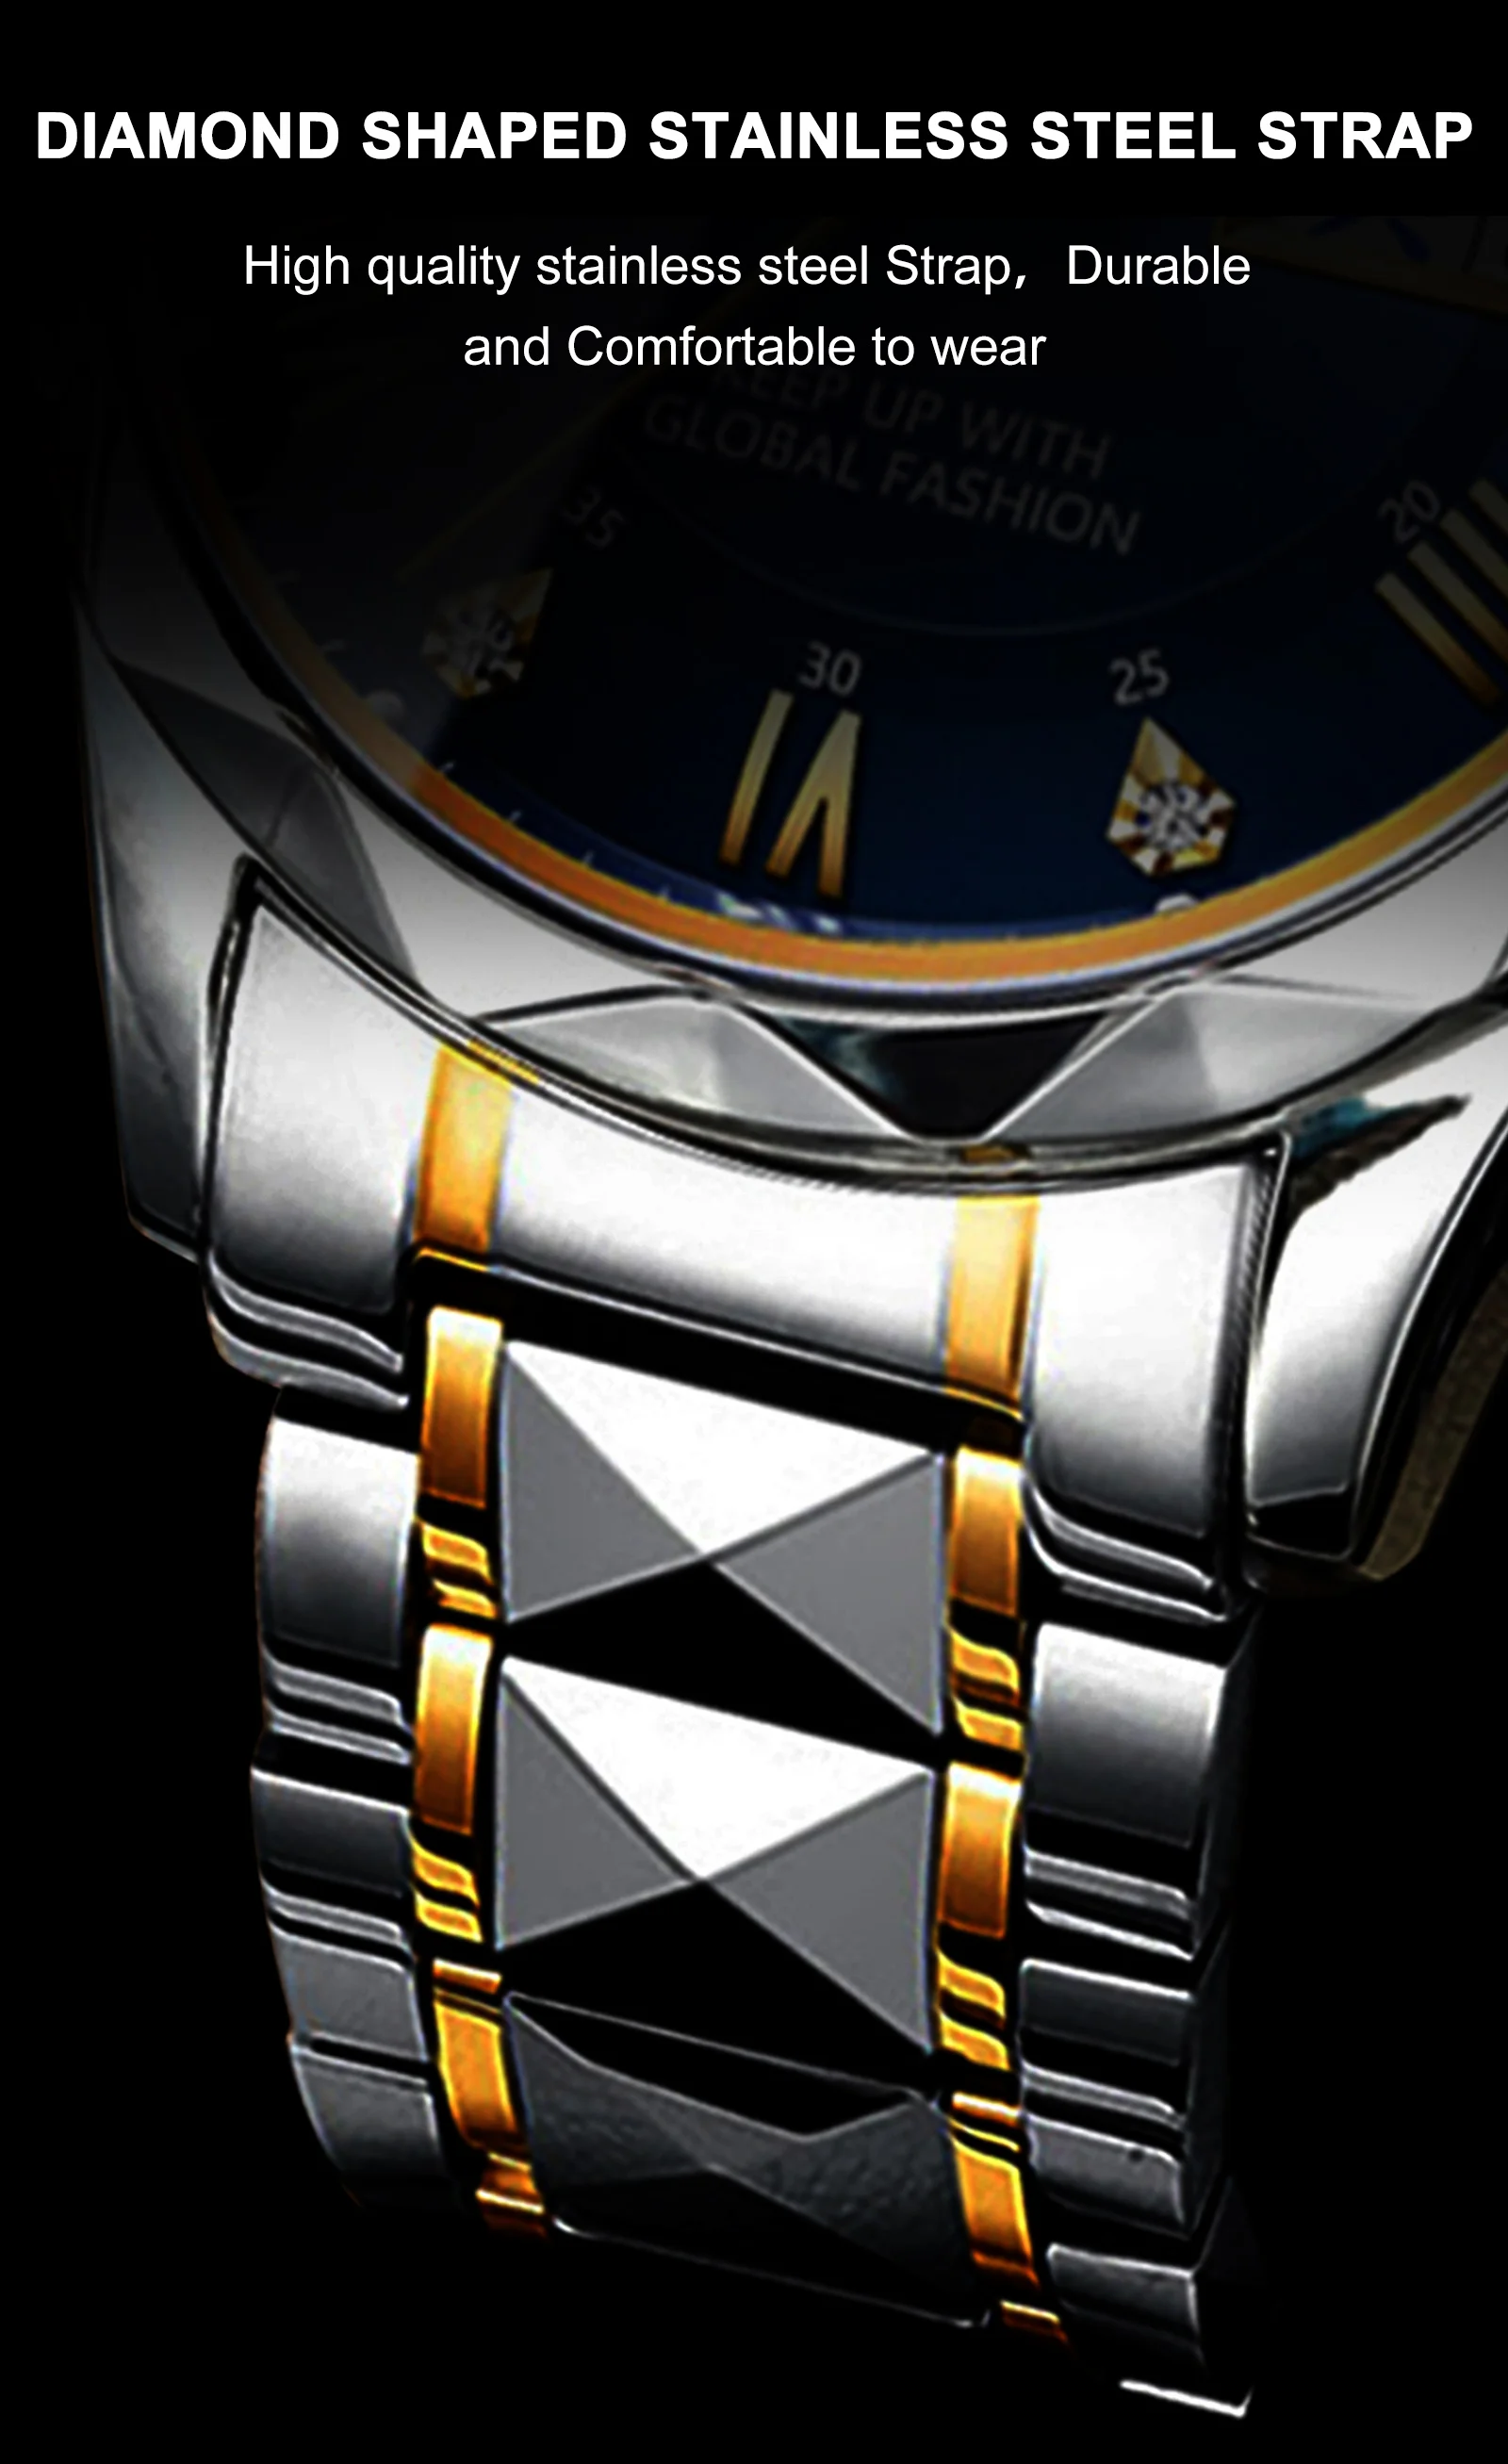 Waterproof luxury wristwatches Stainless Steel Quartz Men's Watch Top Brand Male reloj